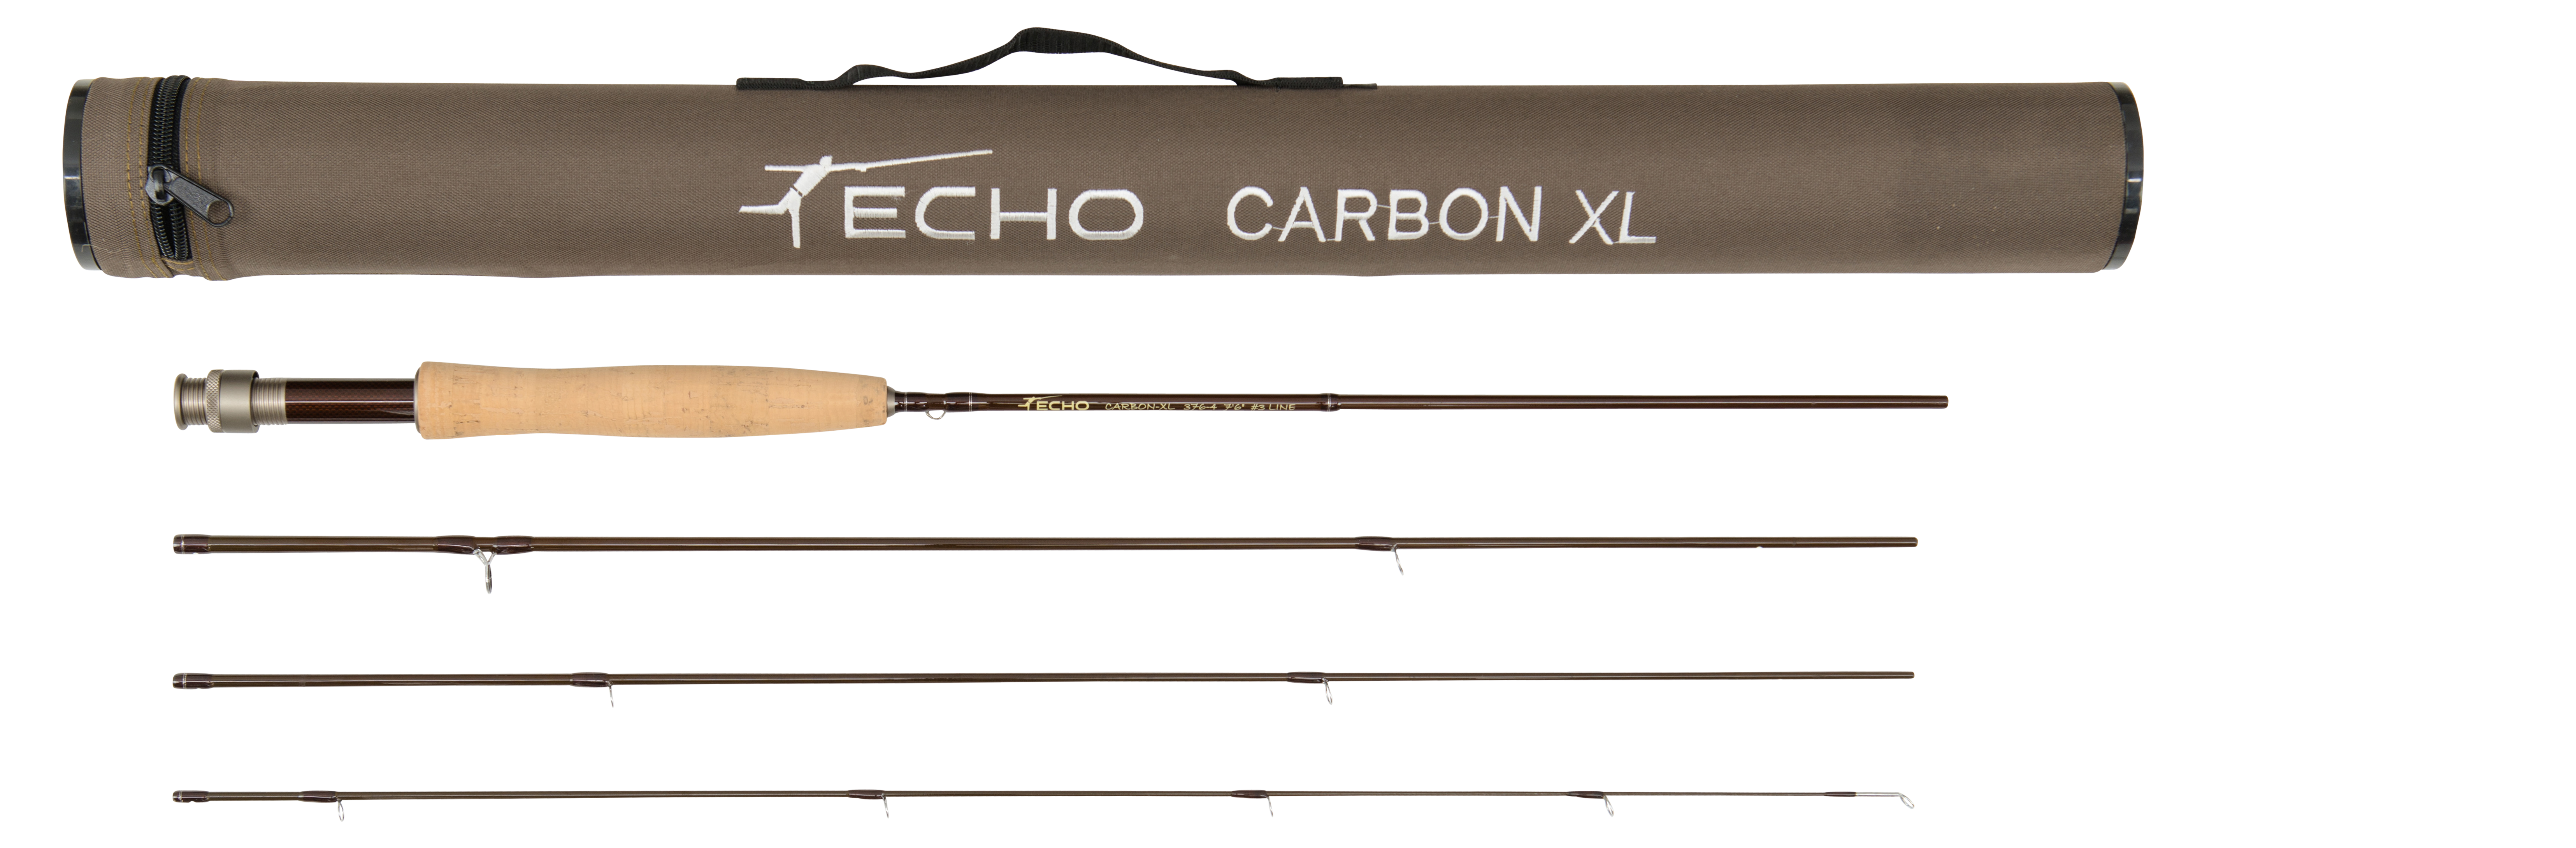 Echo Carbon XL 3wt 7'6 Fly Rod